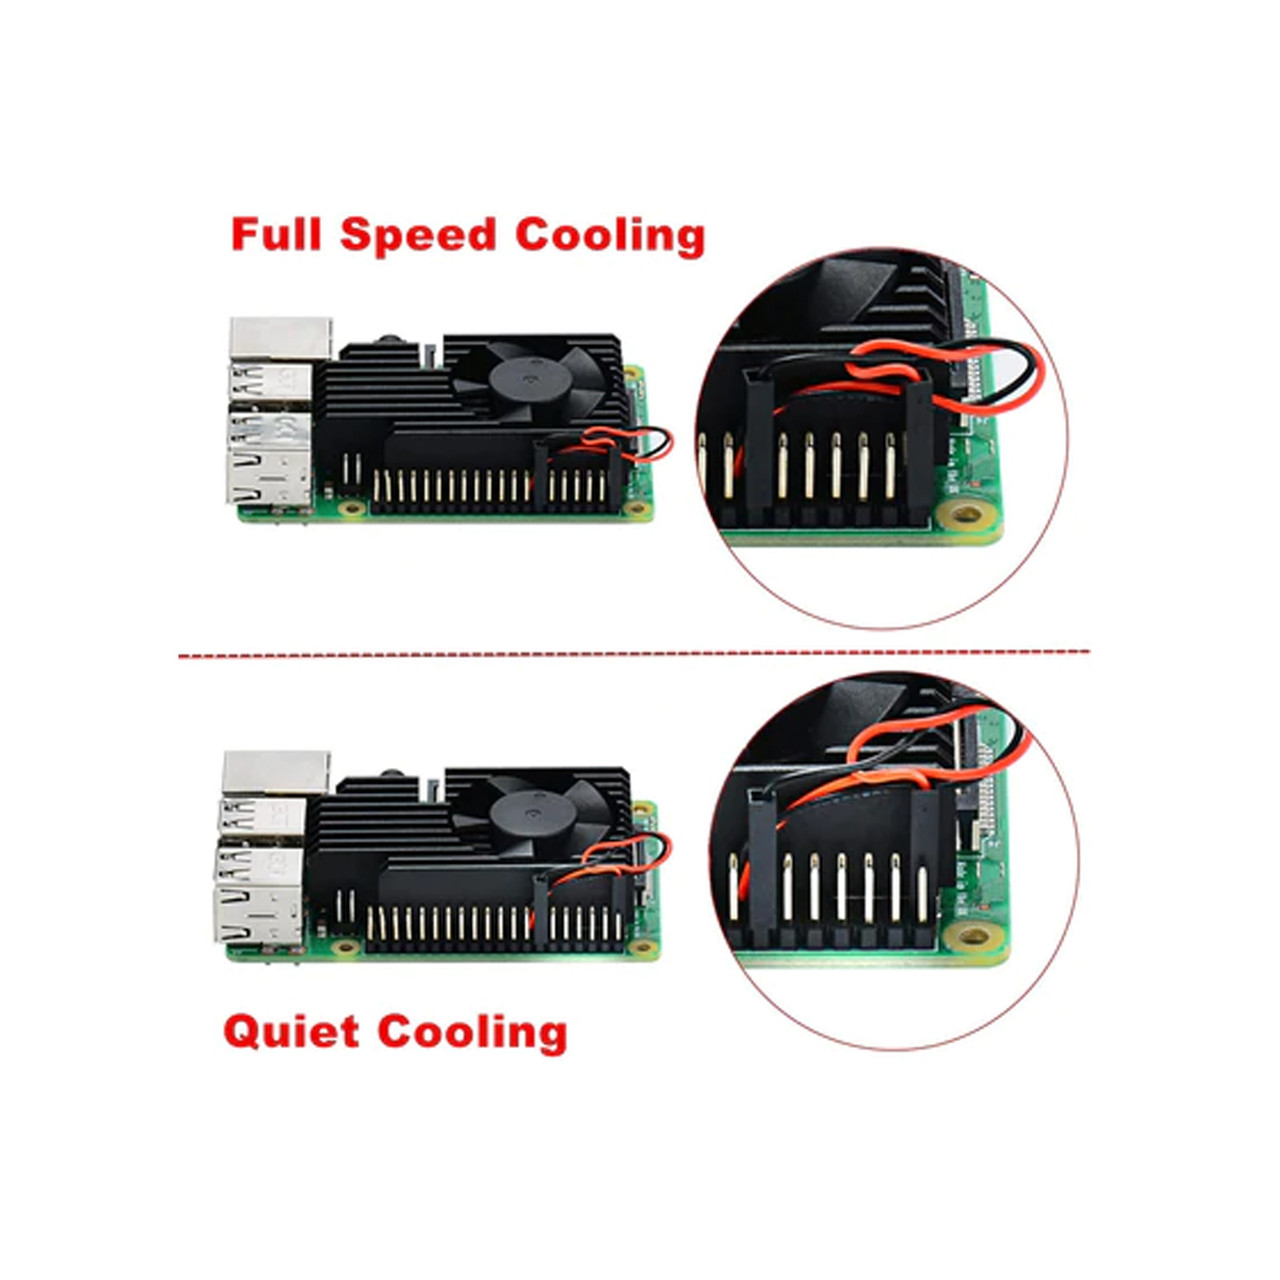 AAAwave ODS712 Aluminum Heatsink Cooling Kit for Raspberry Pi 4B